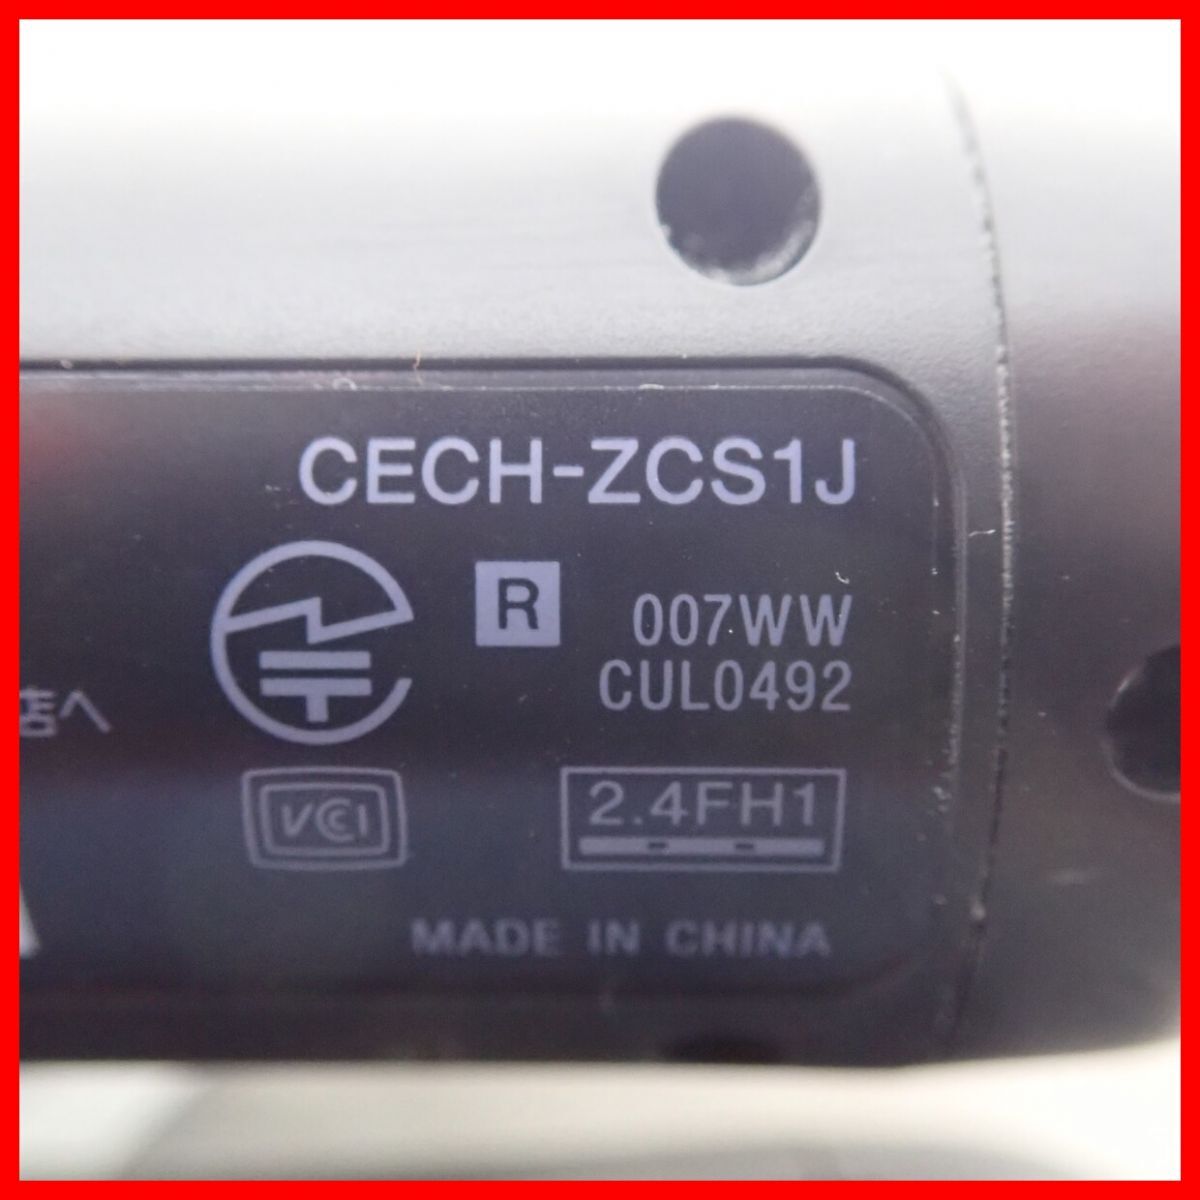 PS3 PlayStation 3 PlayStation Move navigation controller CECH-ZCS1J together 2 piece set SONY Sony electrification only verification [10